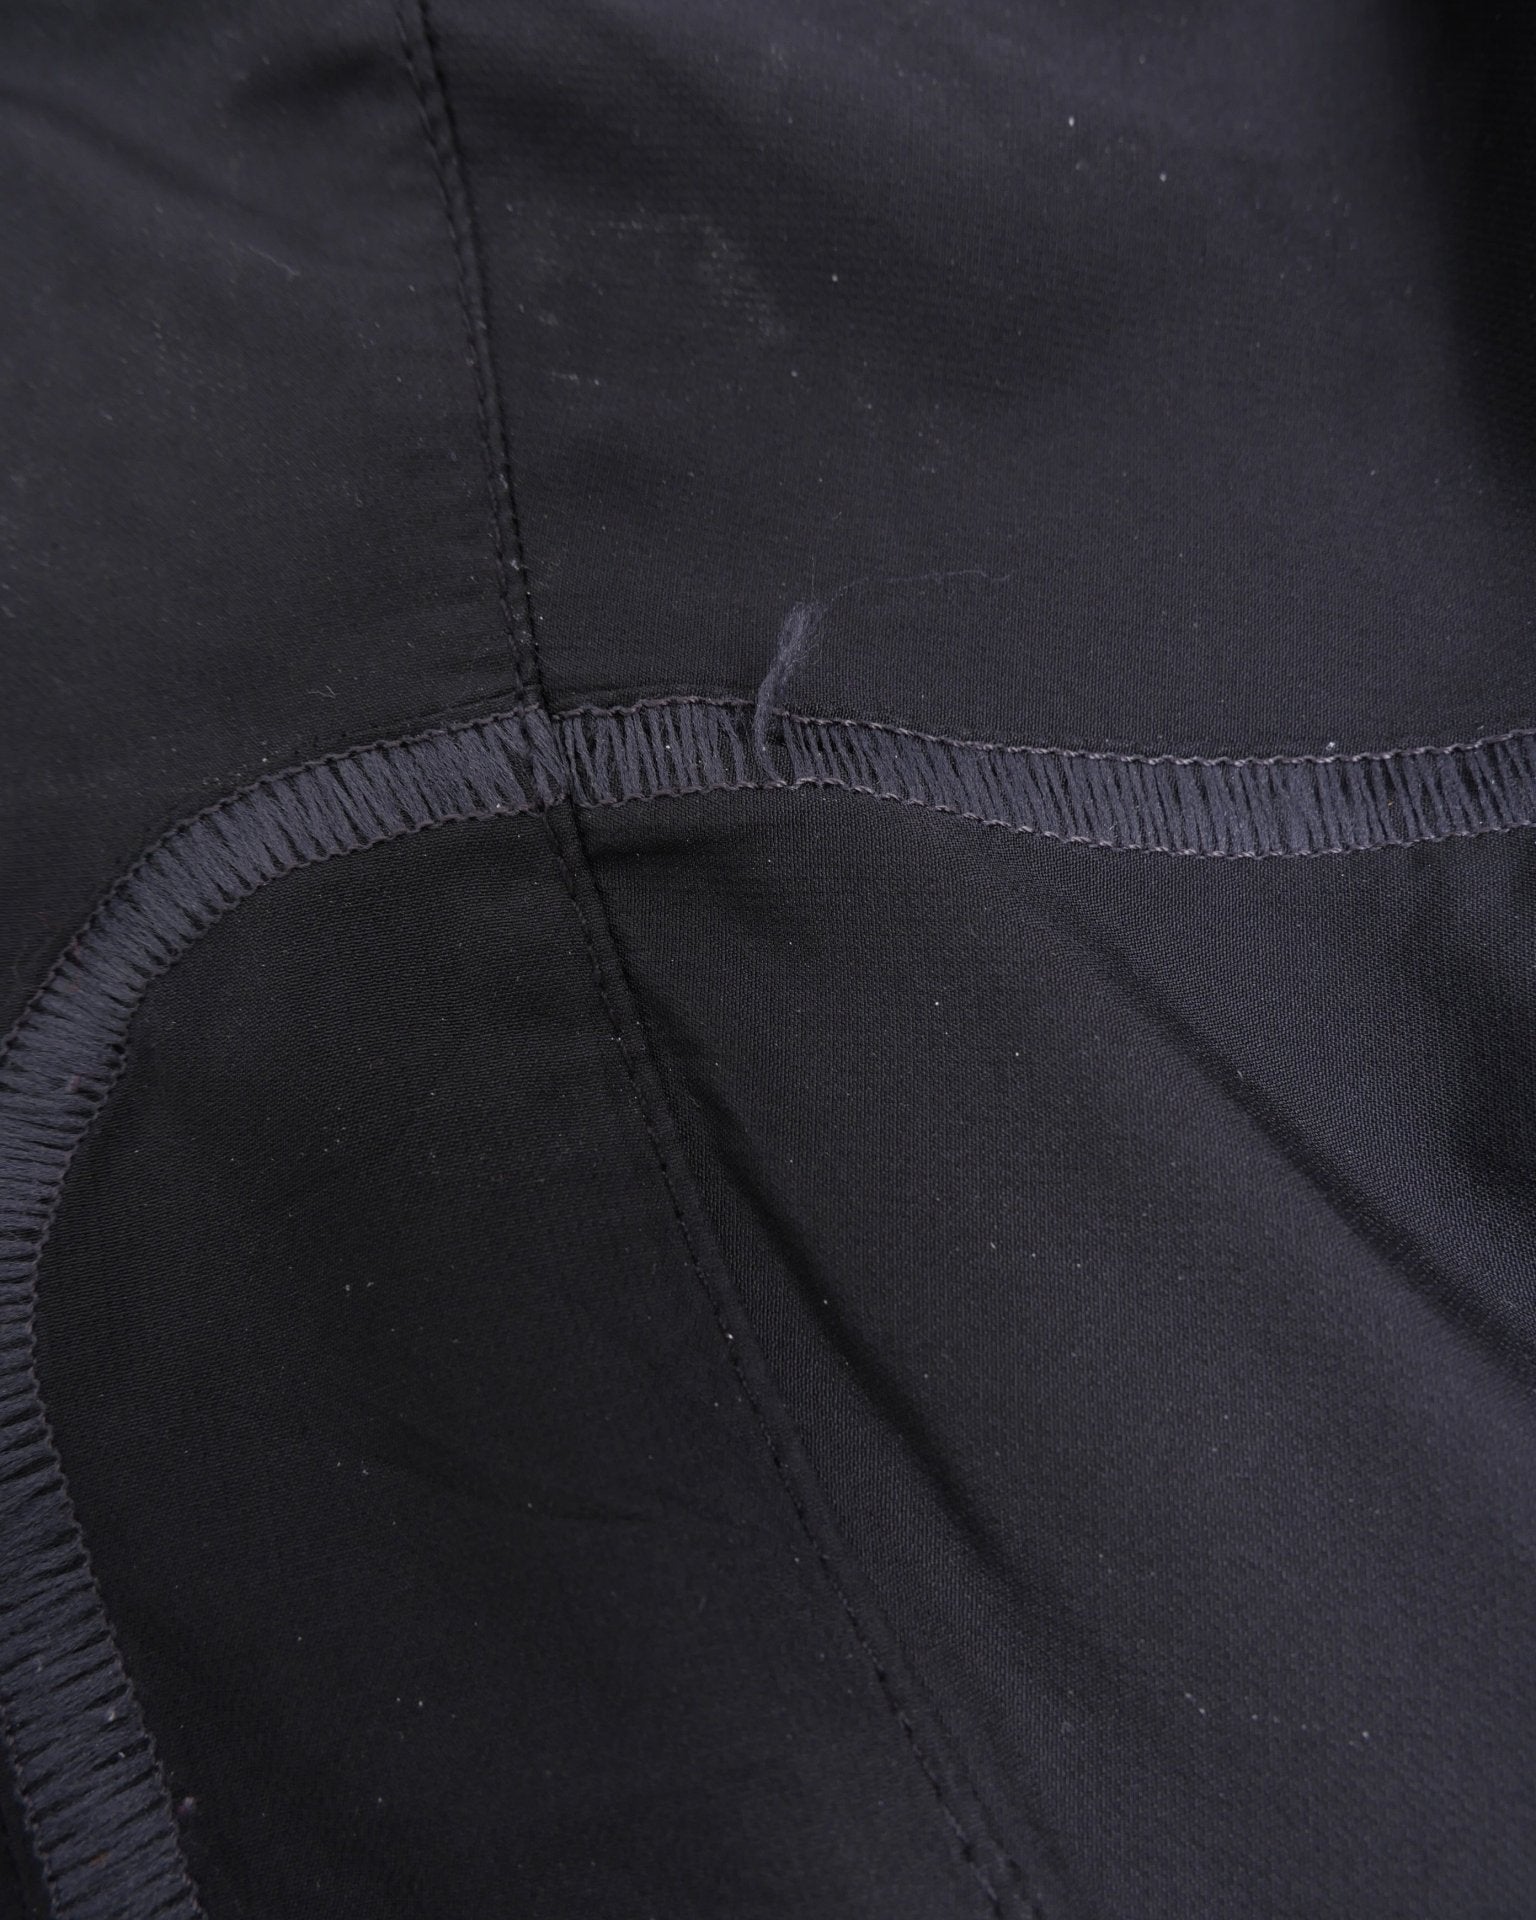 Nike Golf embroidered 'Pinnacle' Half Zip Track Jacket - Peeces